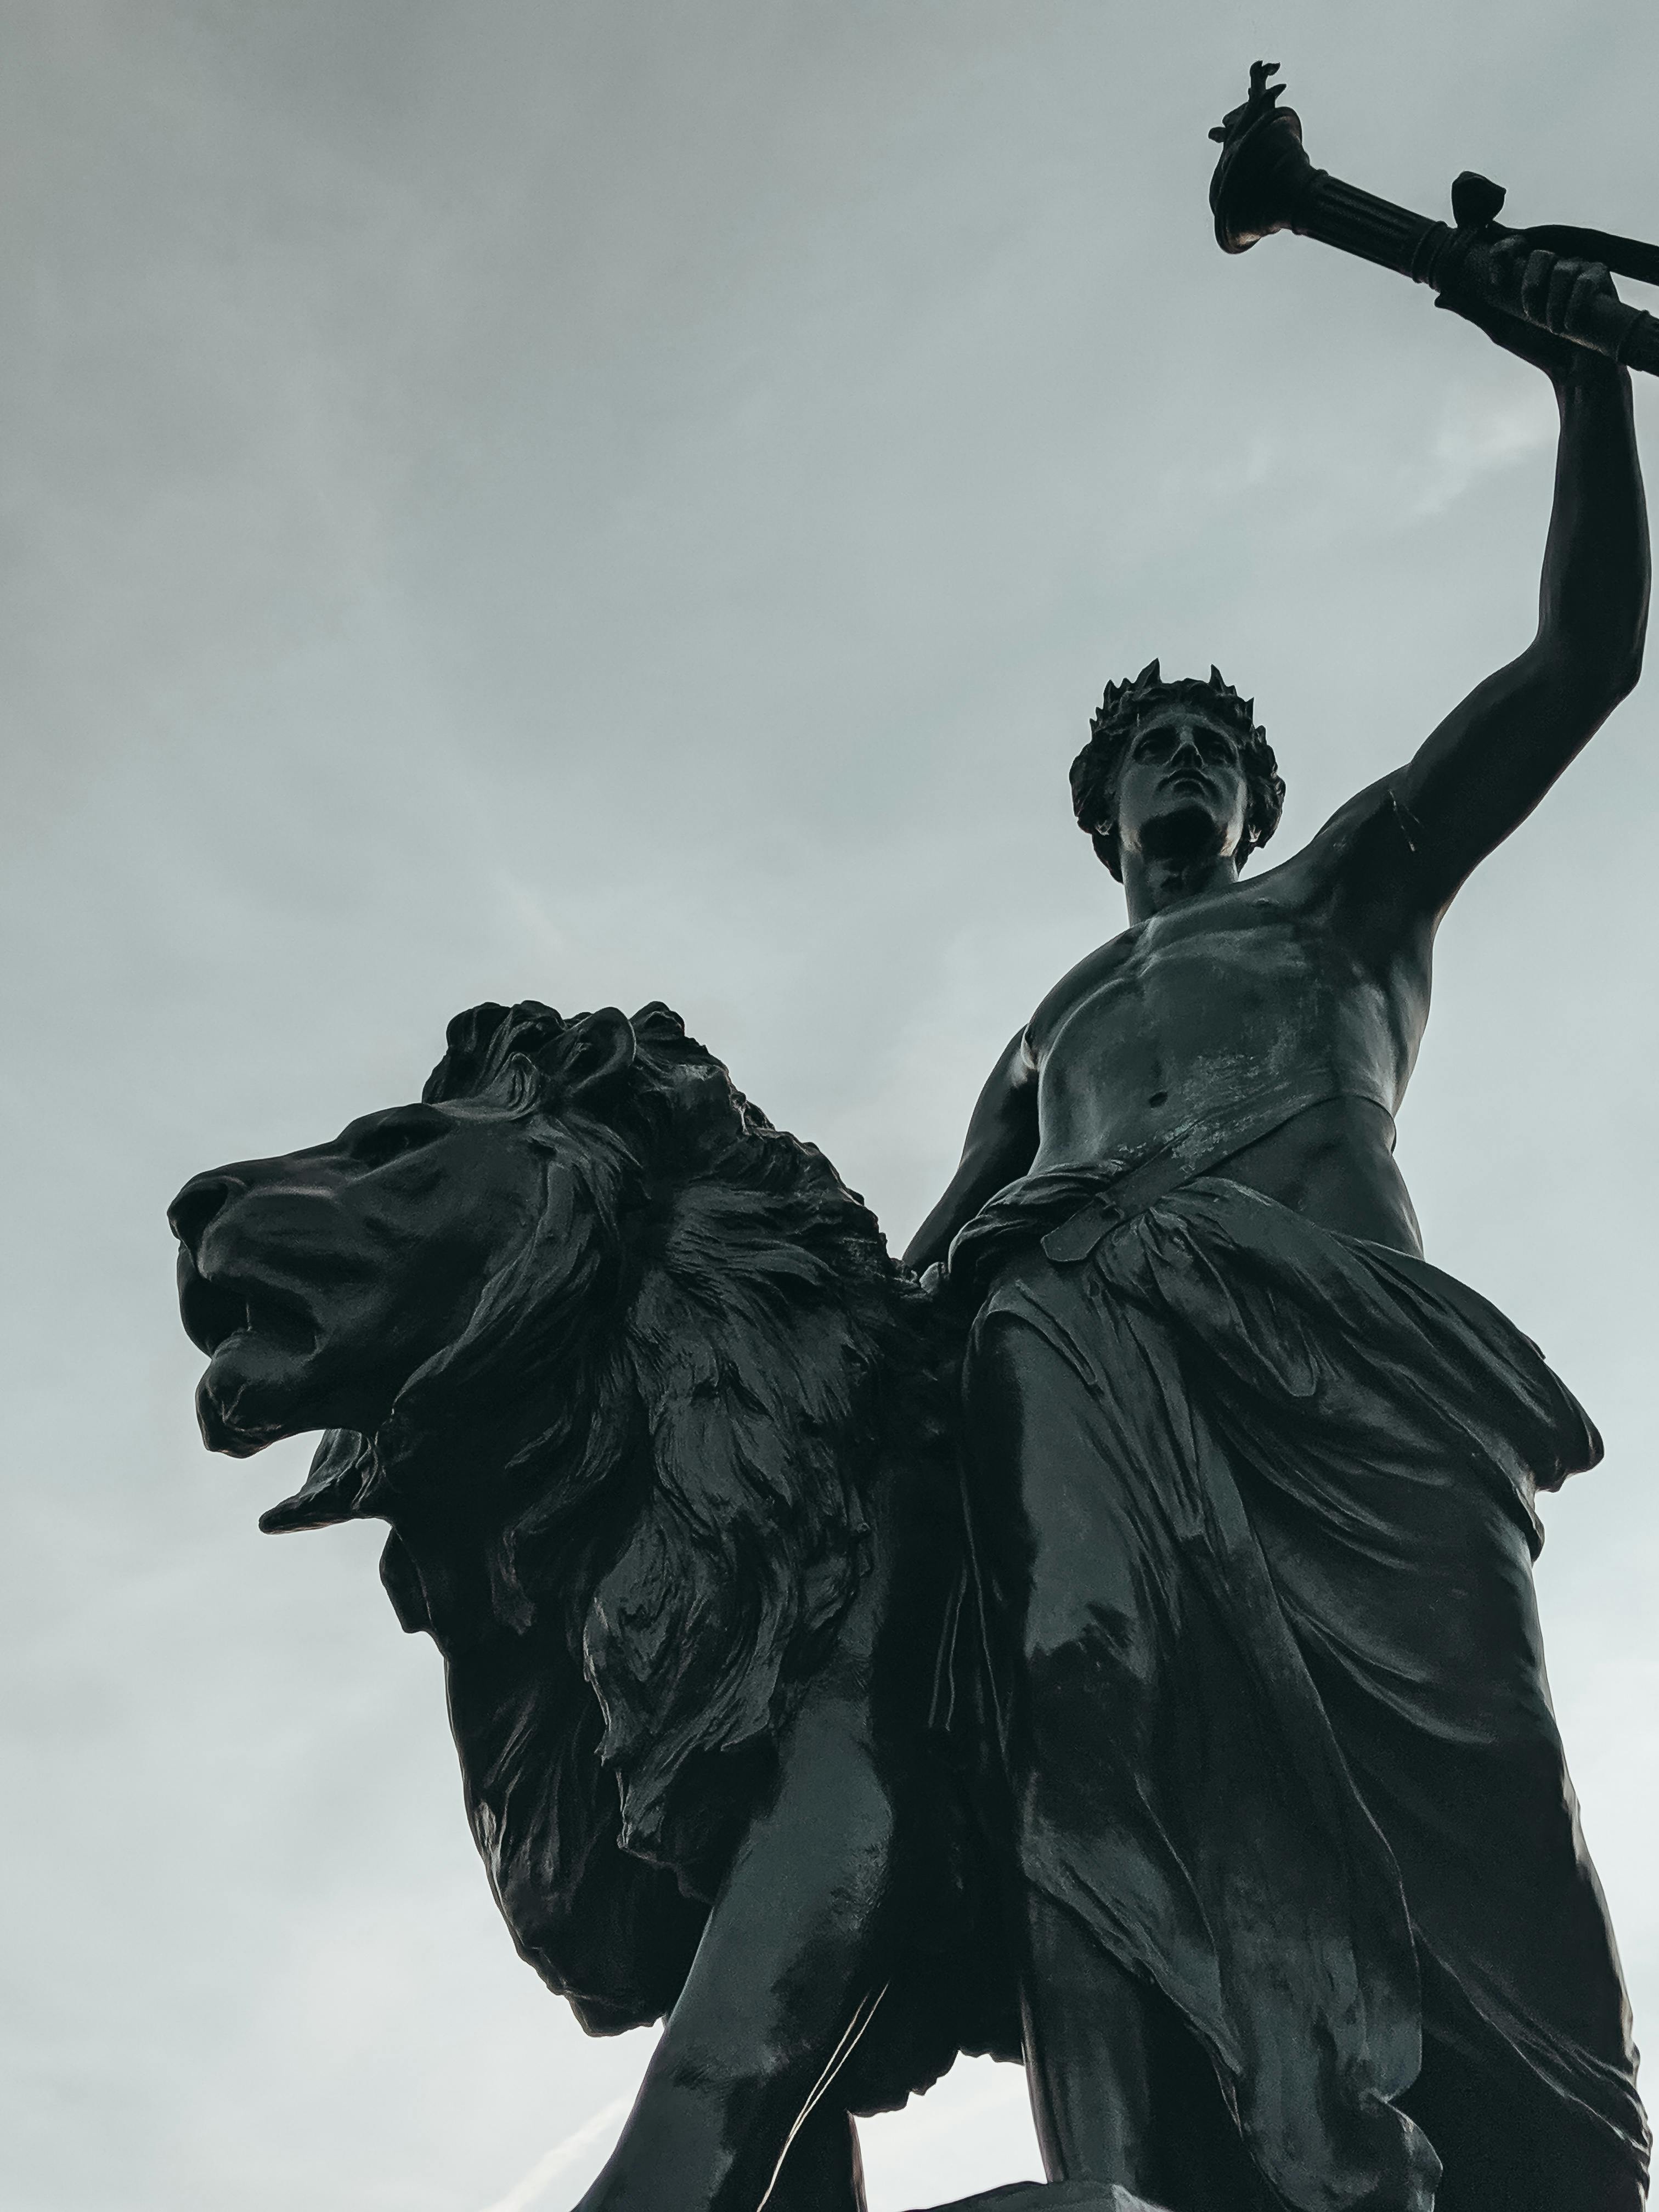 black statue of a man riding a lion